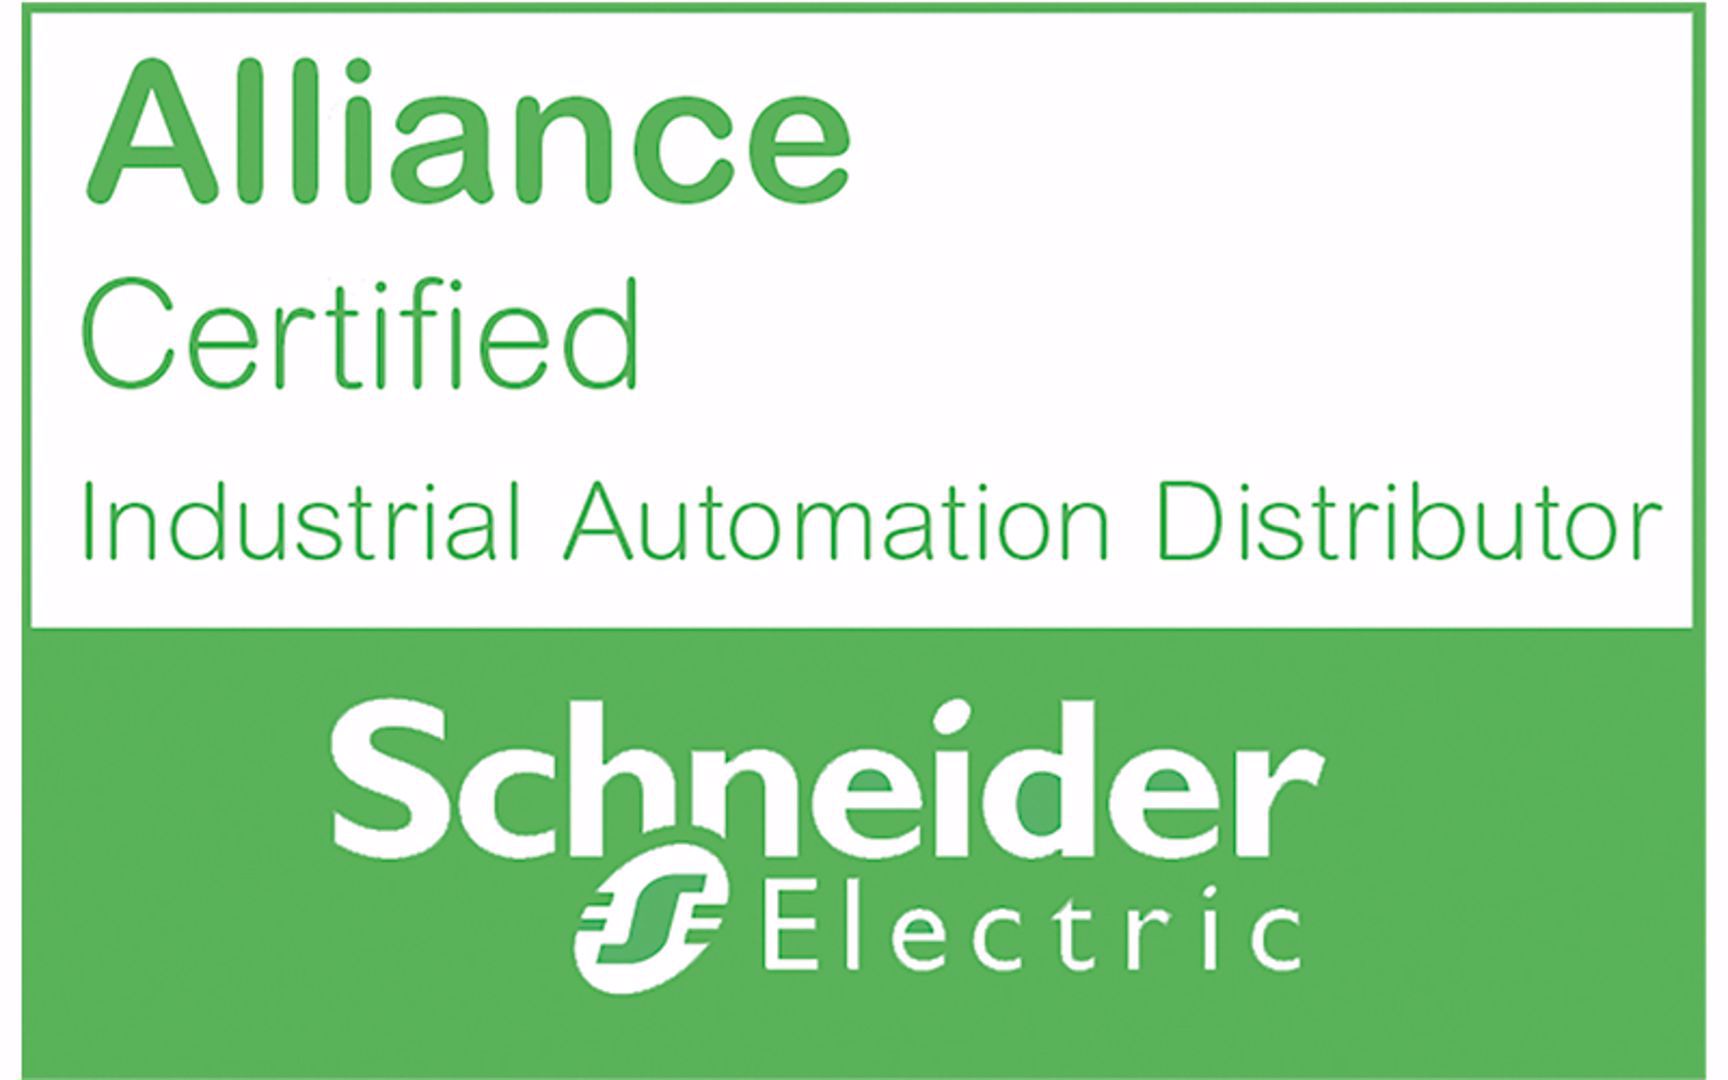 Certified Industrial Automation Distributor (IAD) van Schneider Electric